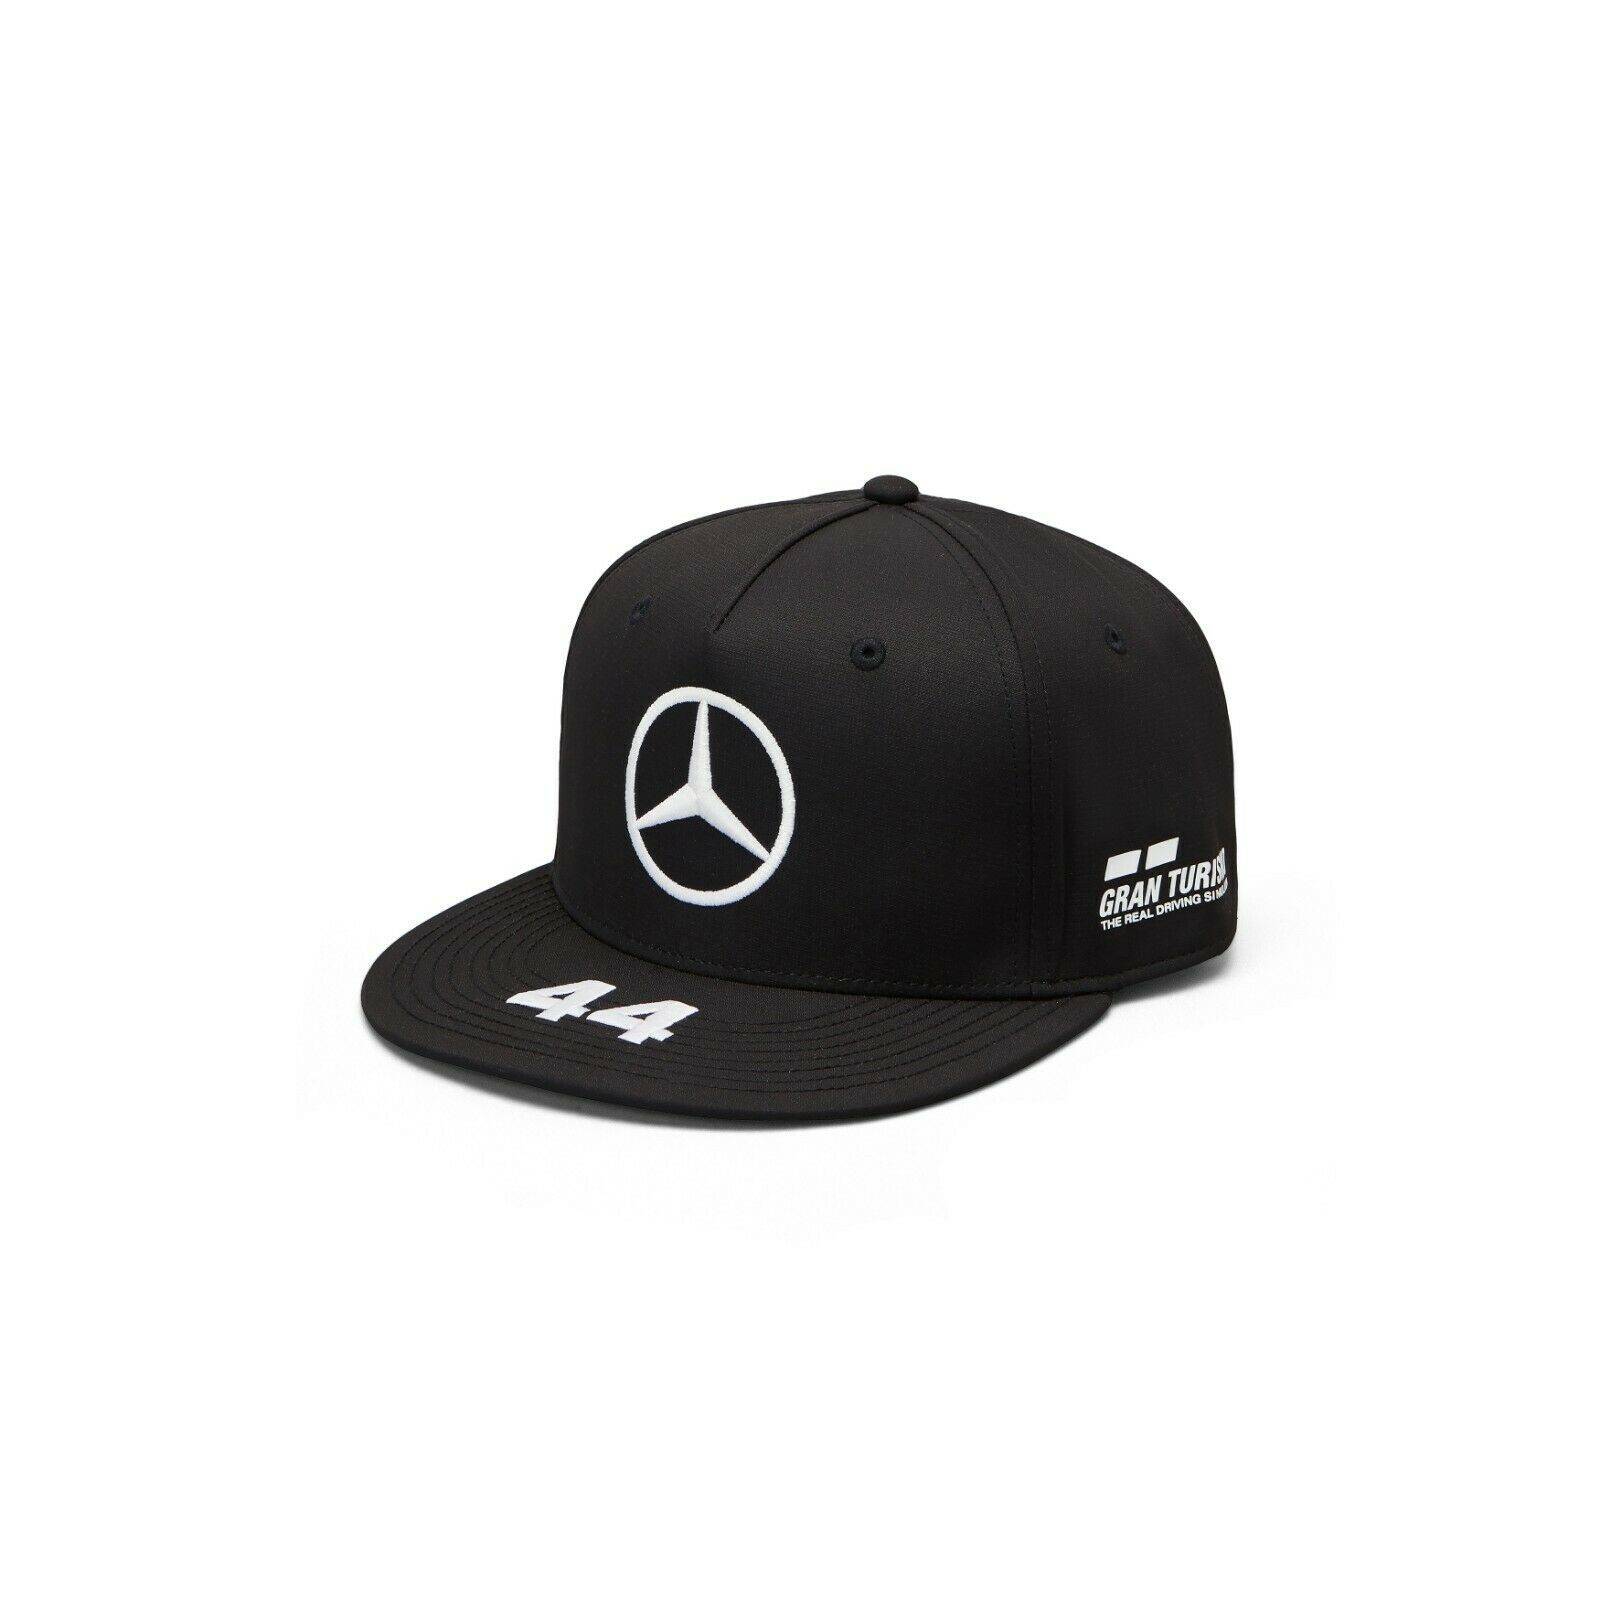 Mercedes-AMG Petronas Motorsport 2019 F1 Lewis Hamilton Flat Brim Cap Black | Official Merchandise | Flat Brim | Adjustable Fit | Fan Gear |  Halabh.com